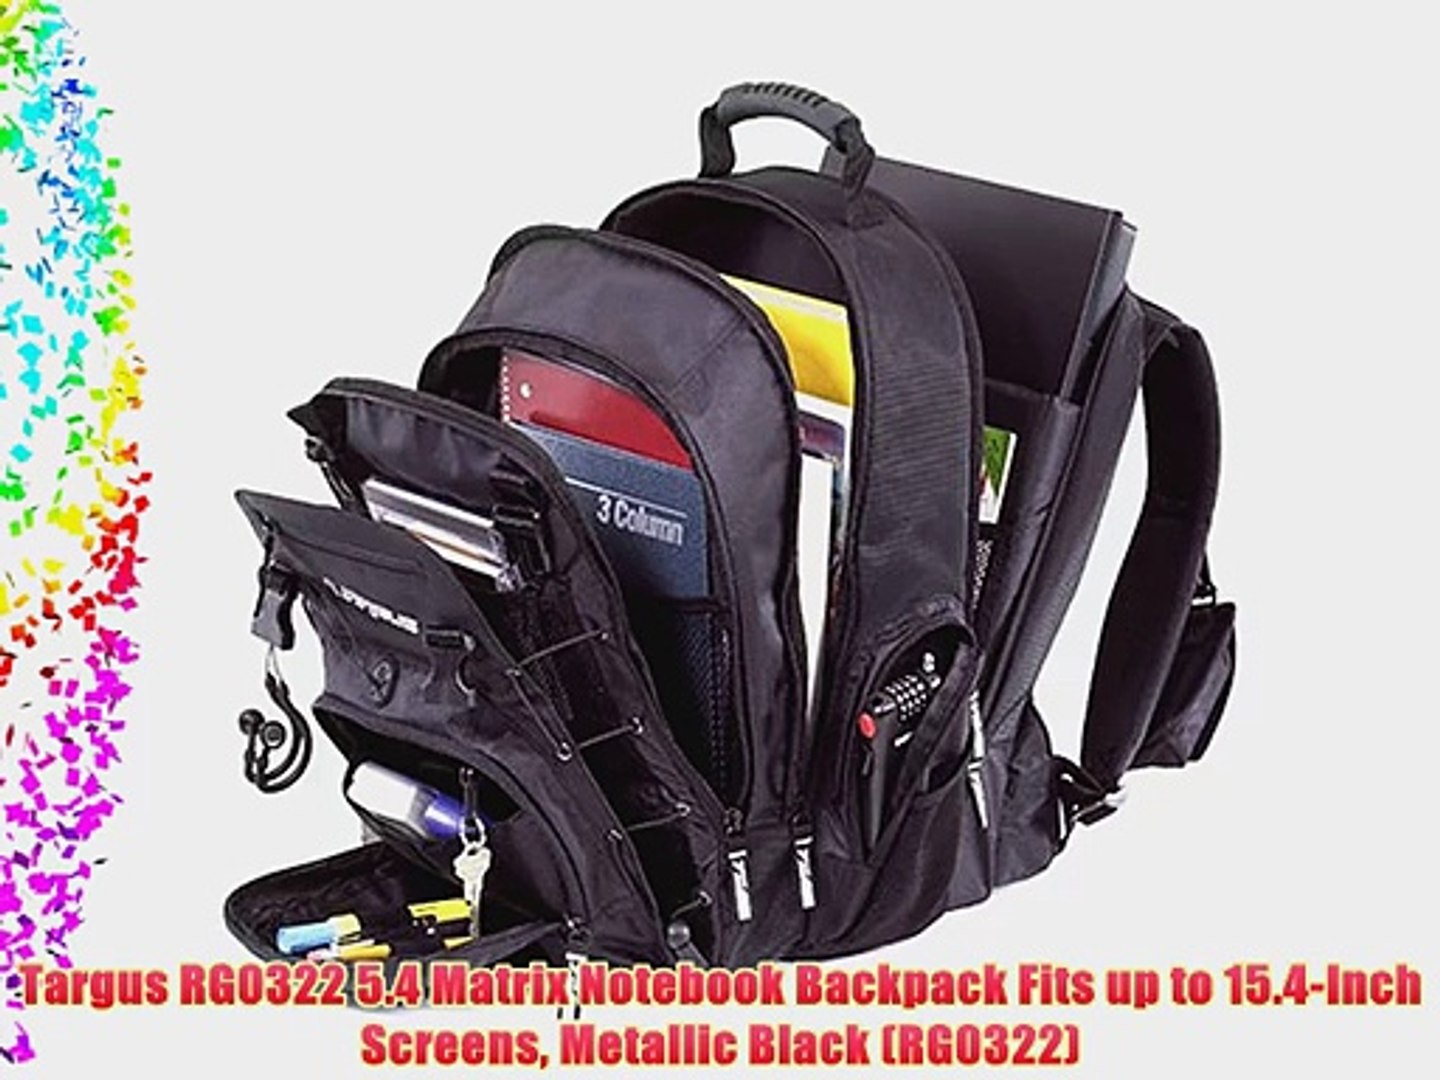 Targus RG0322 5.4 Matrix Notebook Backpack Fits up to 15.4-Inch Screens  Metallic Black (RG0322) - video Dailymotion